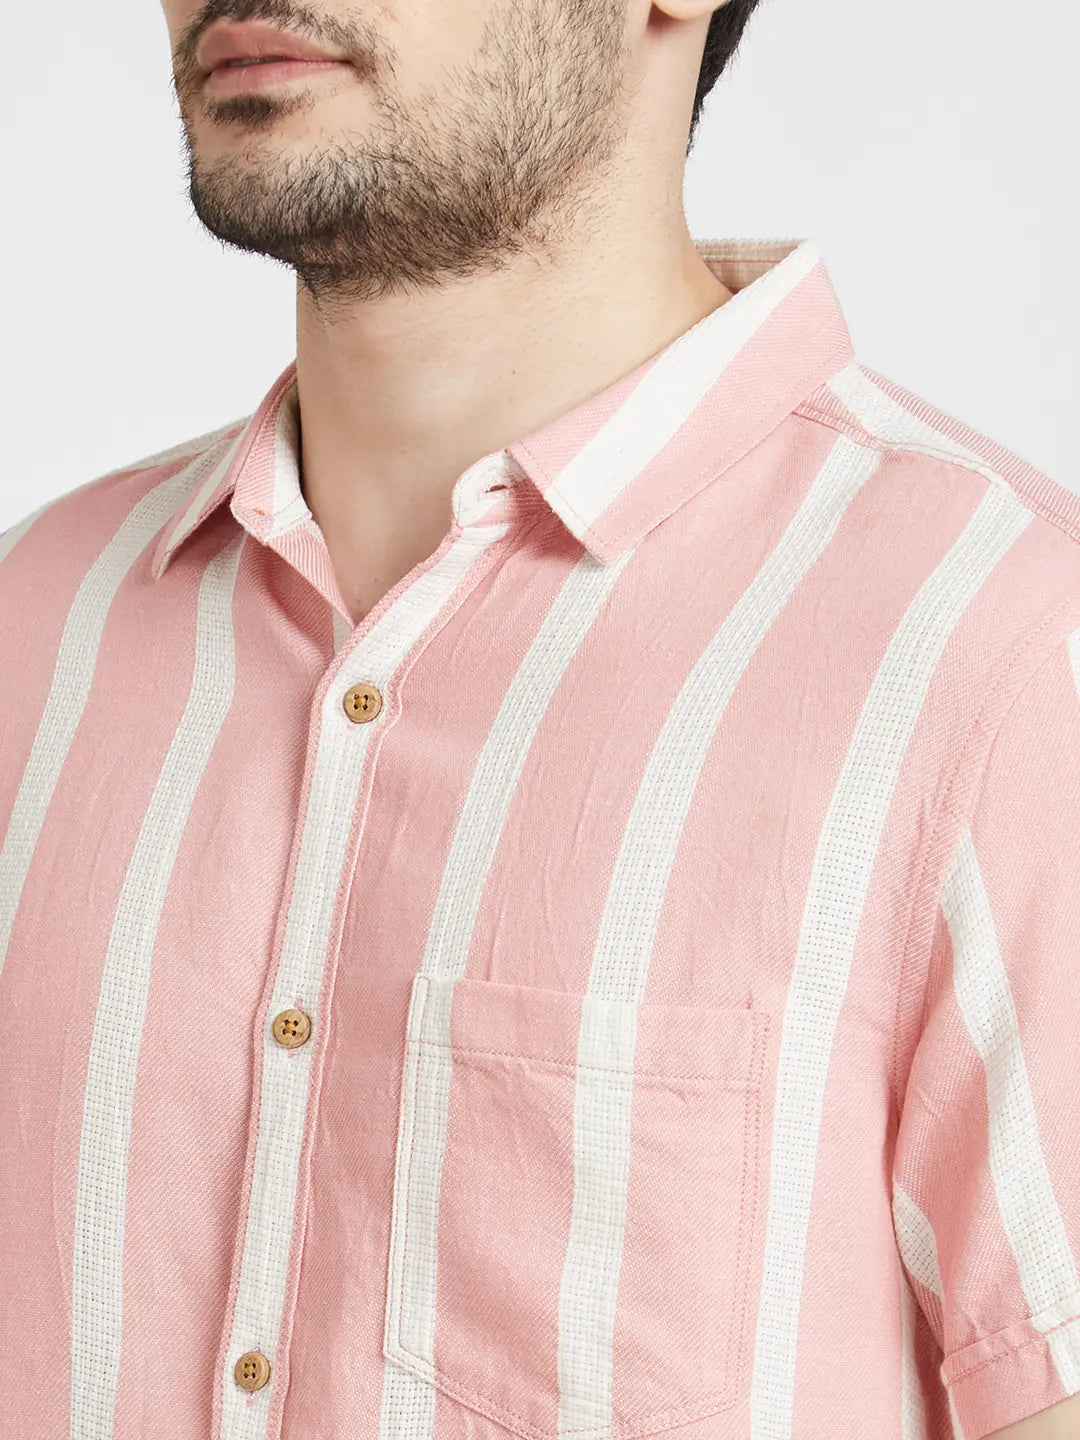 Spykar Men Dusty Pink Cotton Slim Fit Half Sleeve Striped Shirt